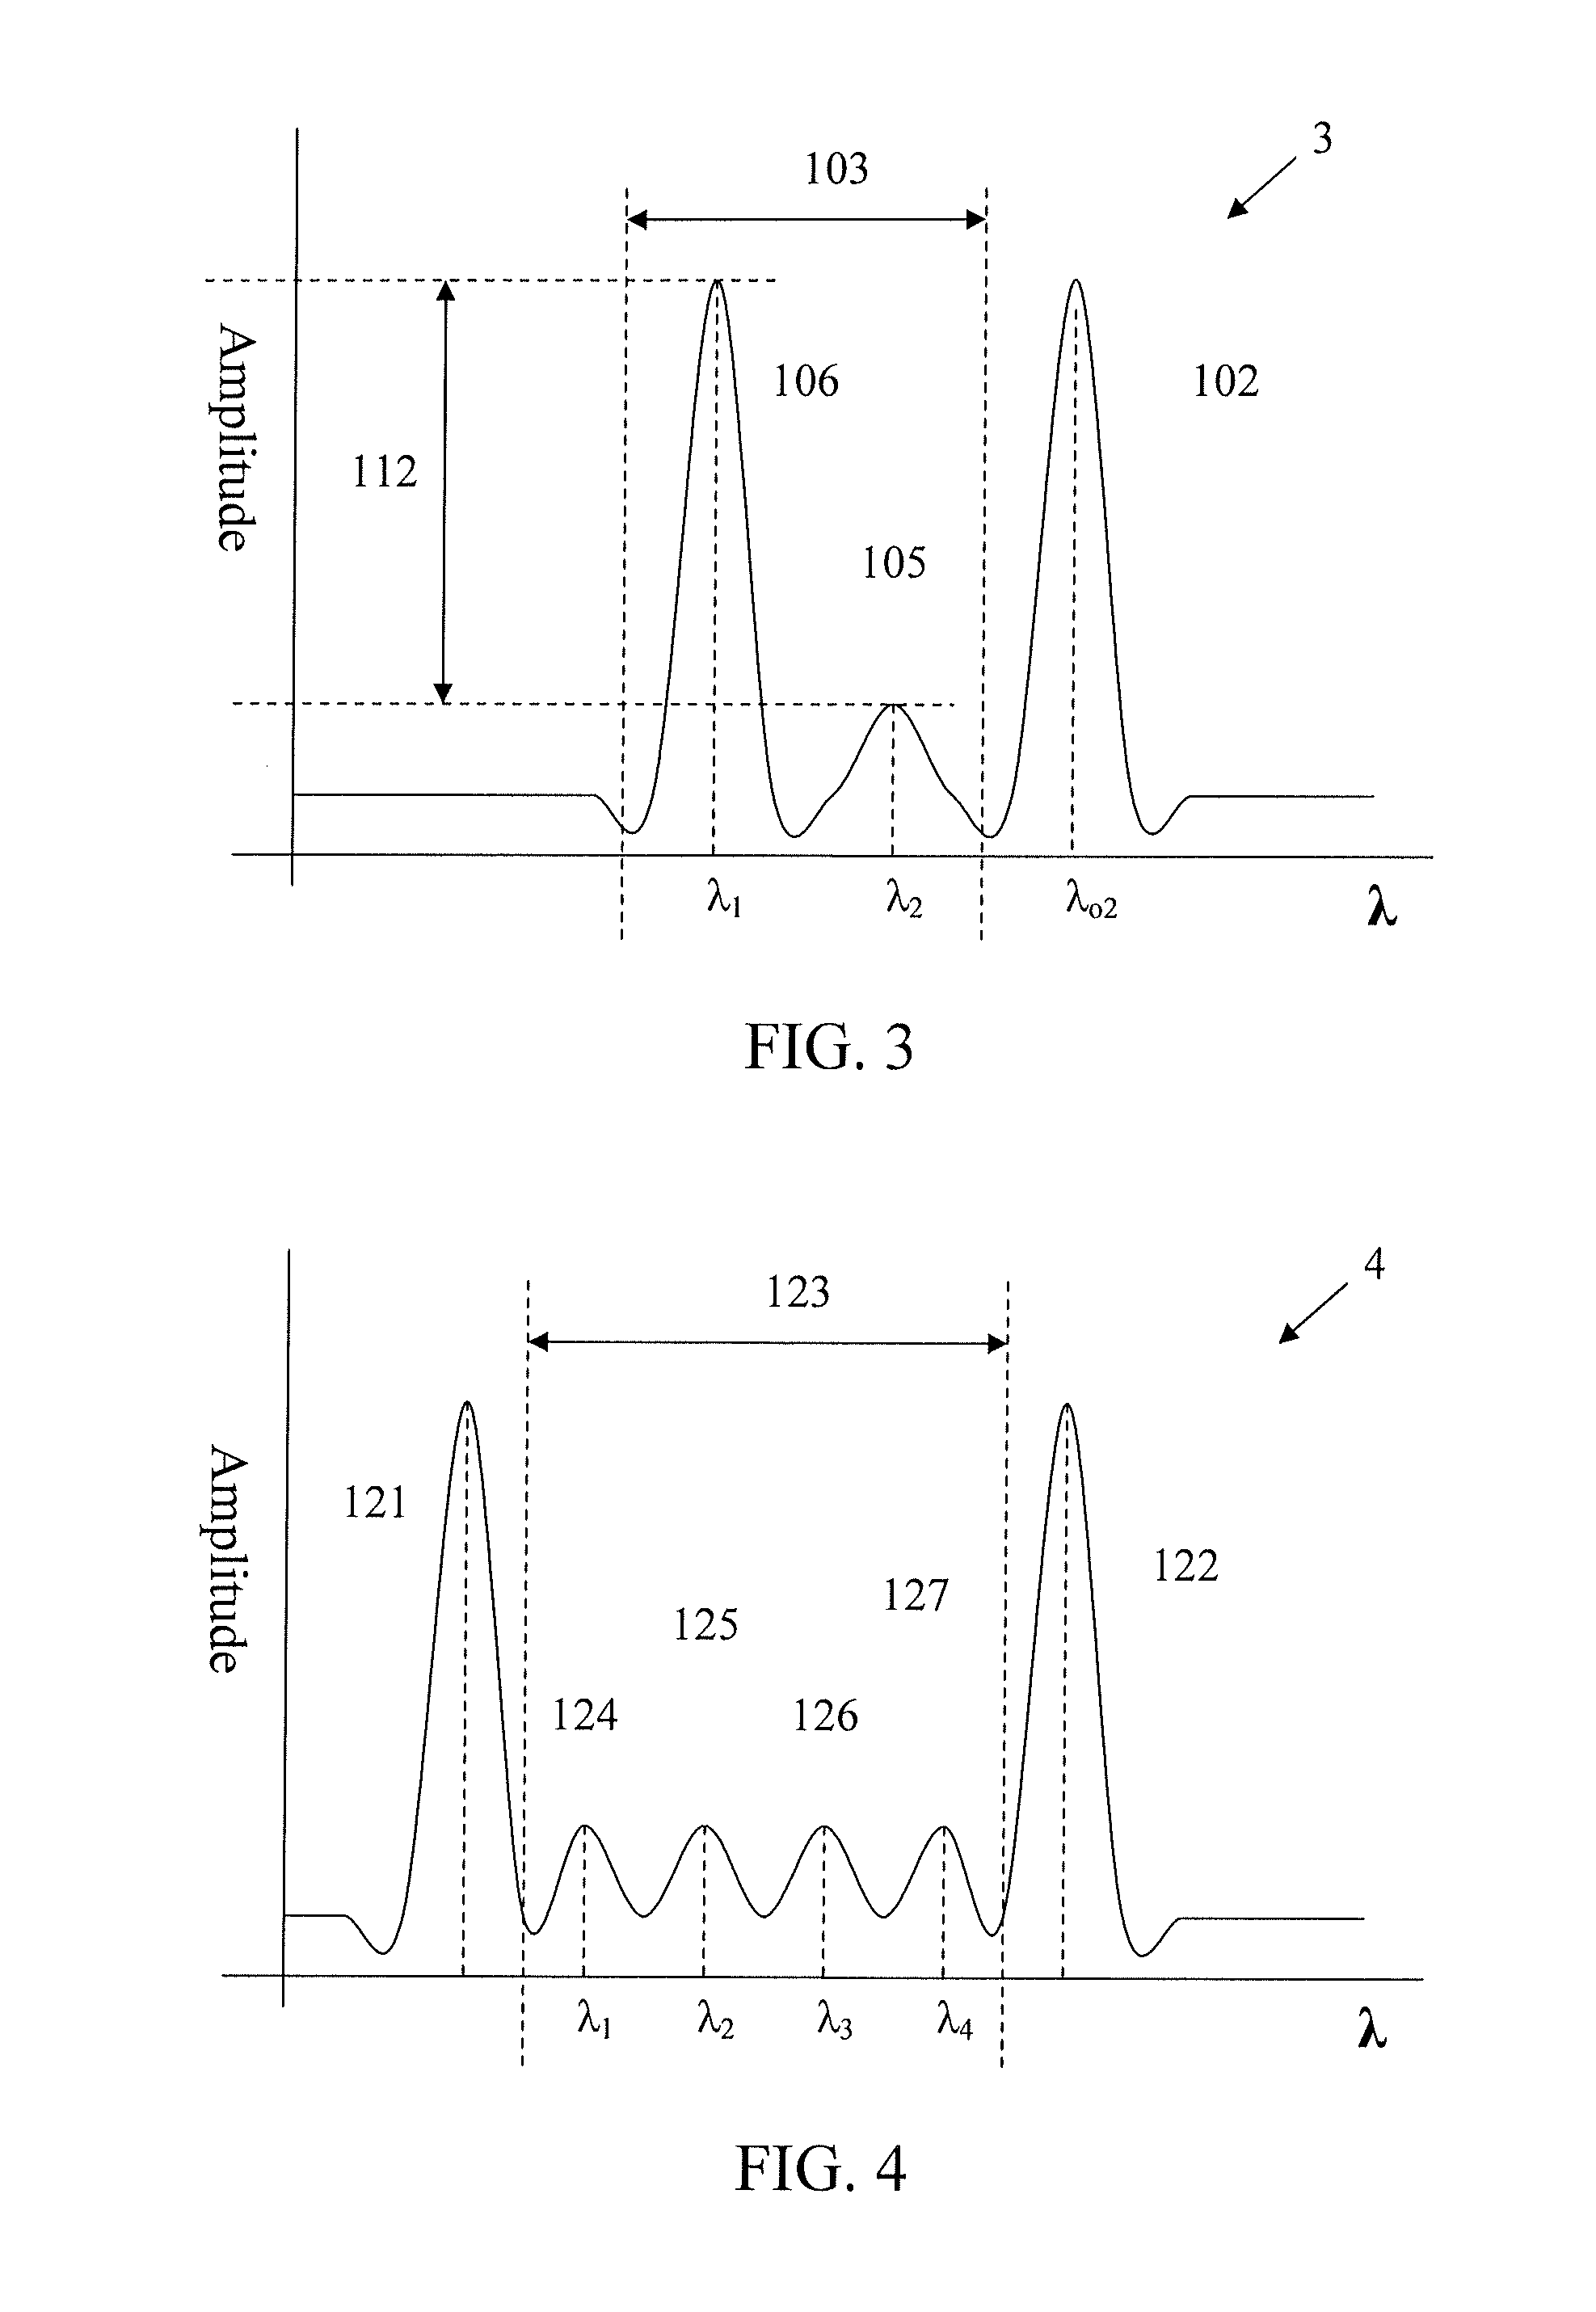 Method for monitoring wavelength-division multiplexed signal